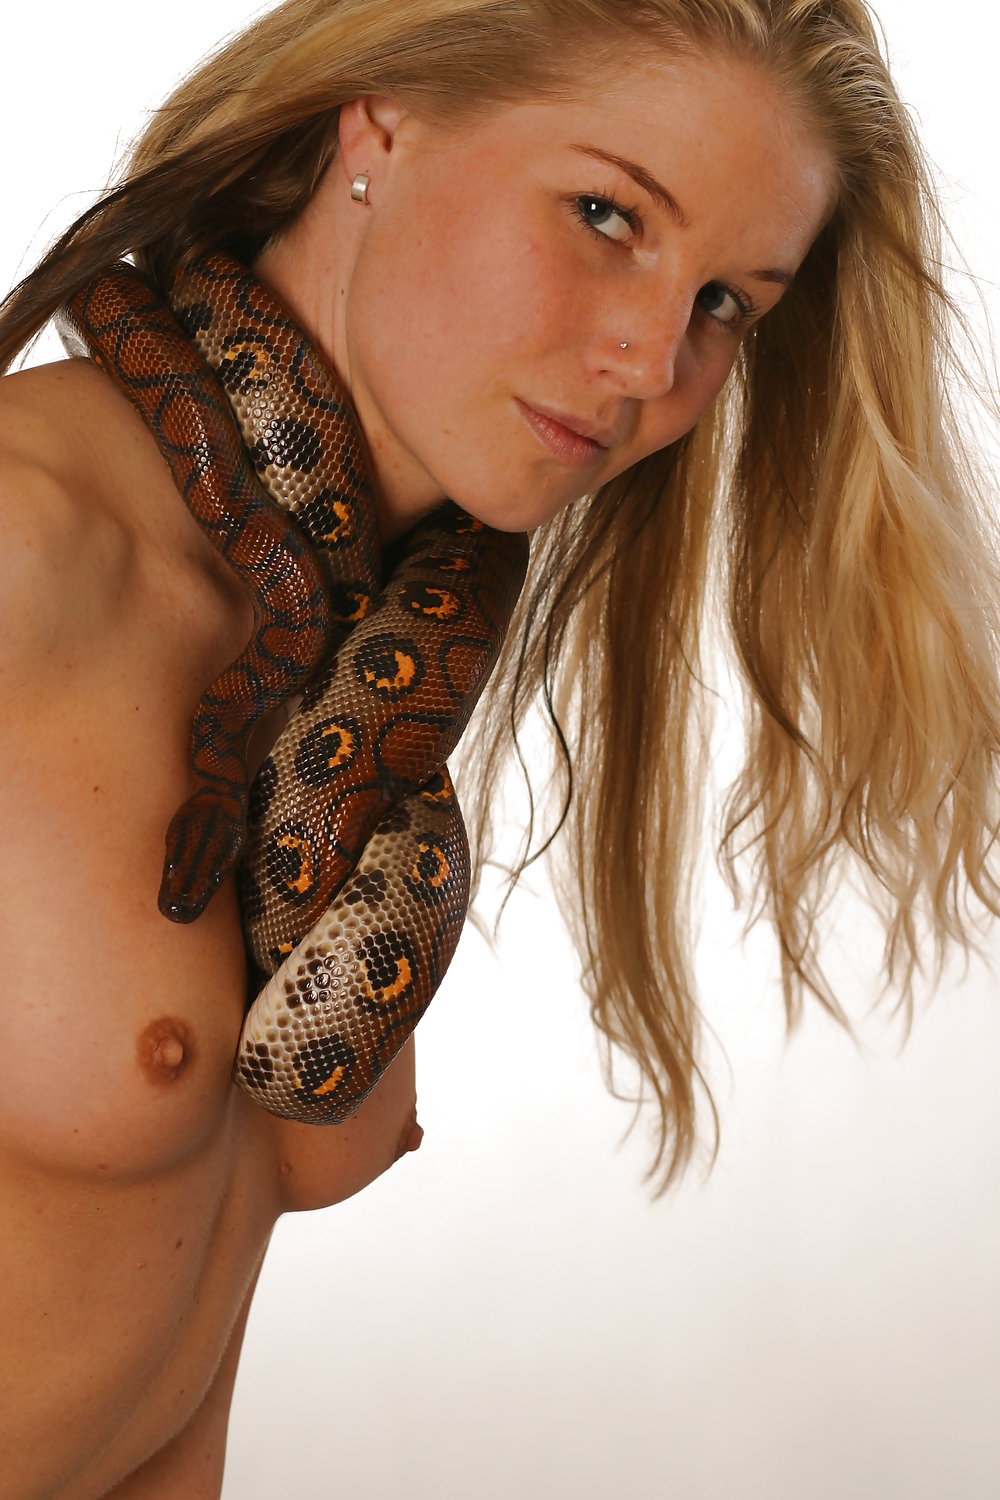 Girls and snake